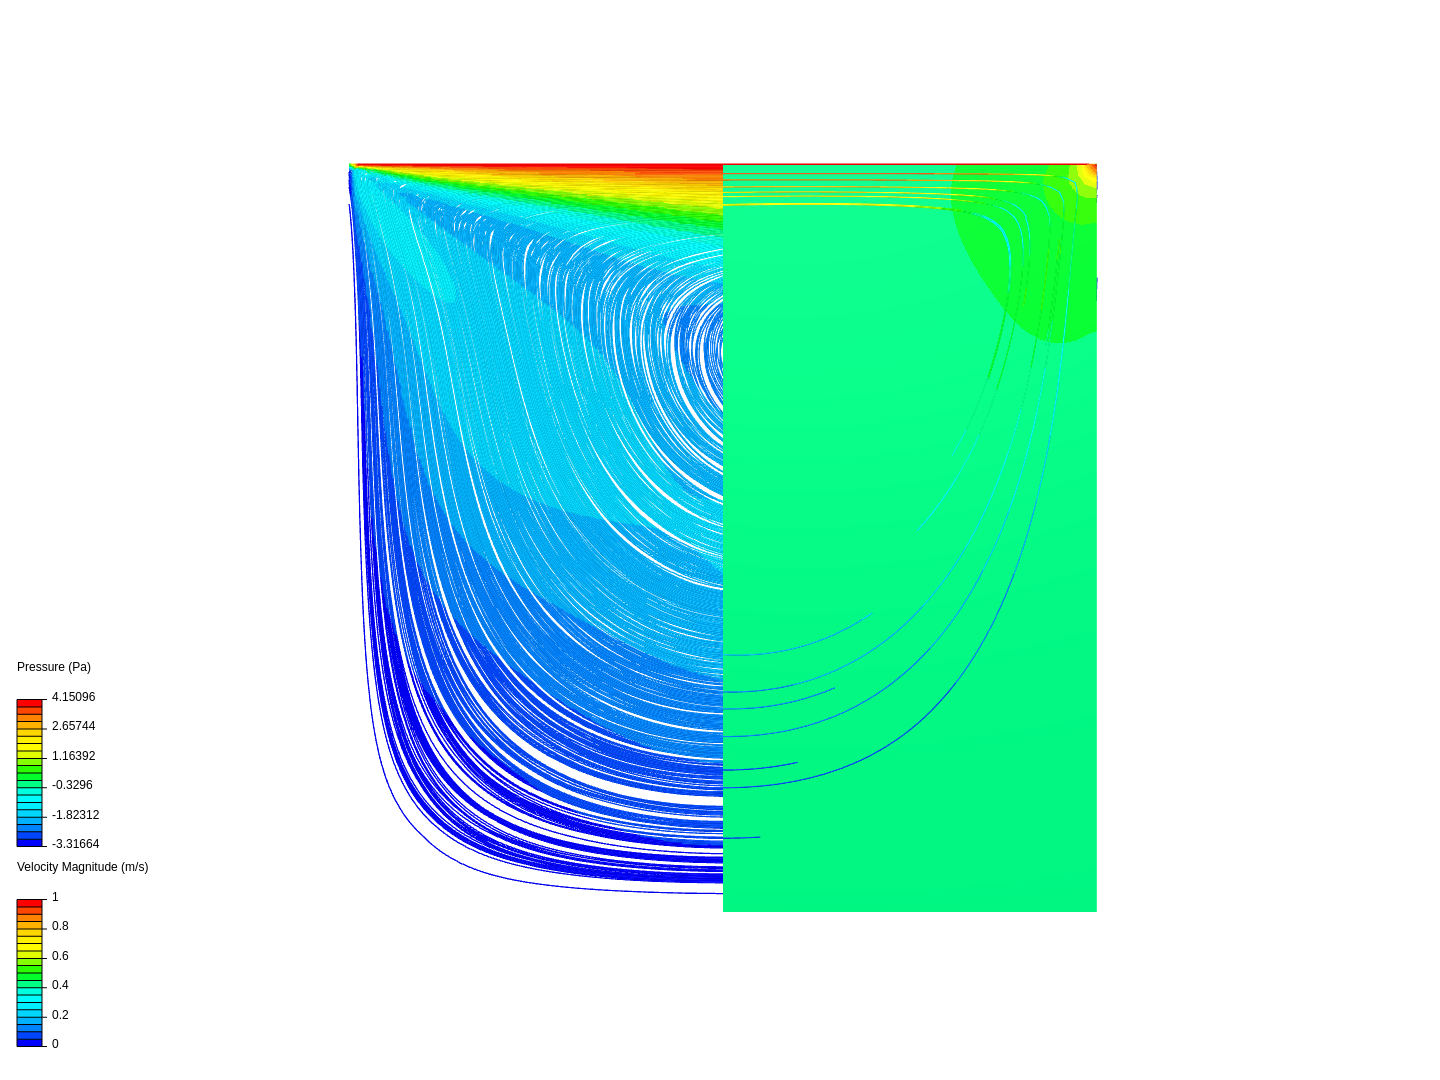 Lid-Driven Cavity image